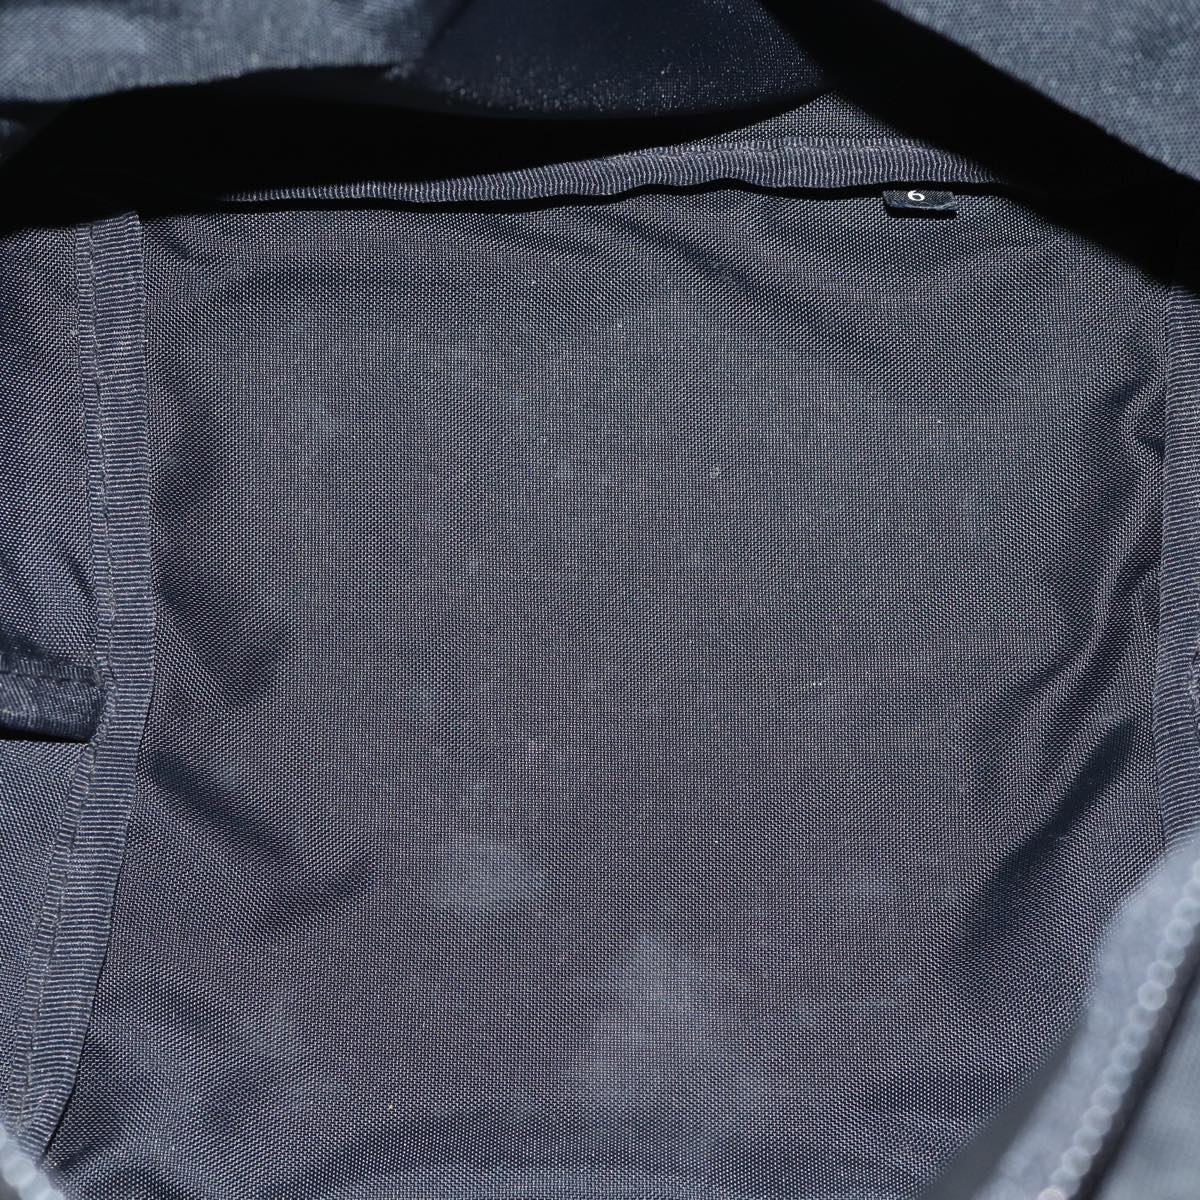 Burberrys Nova Check Blue Label Hand Bag Nylon Black Auth kk206